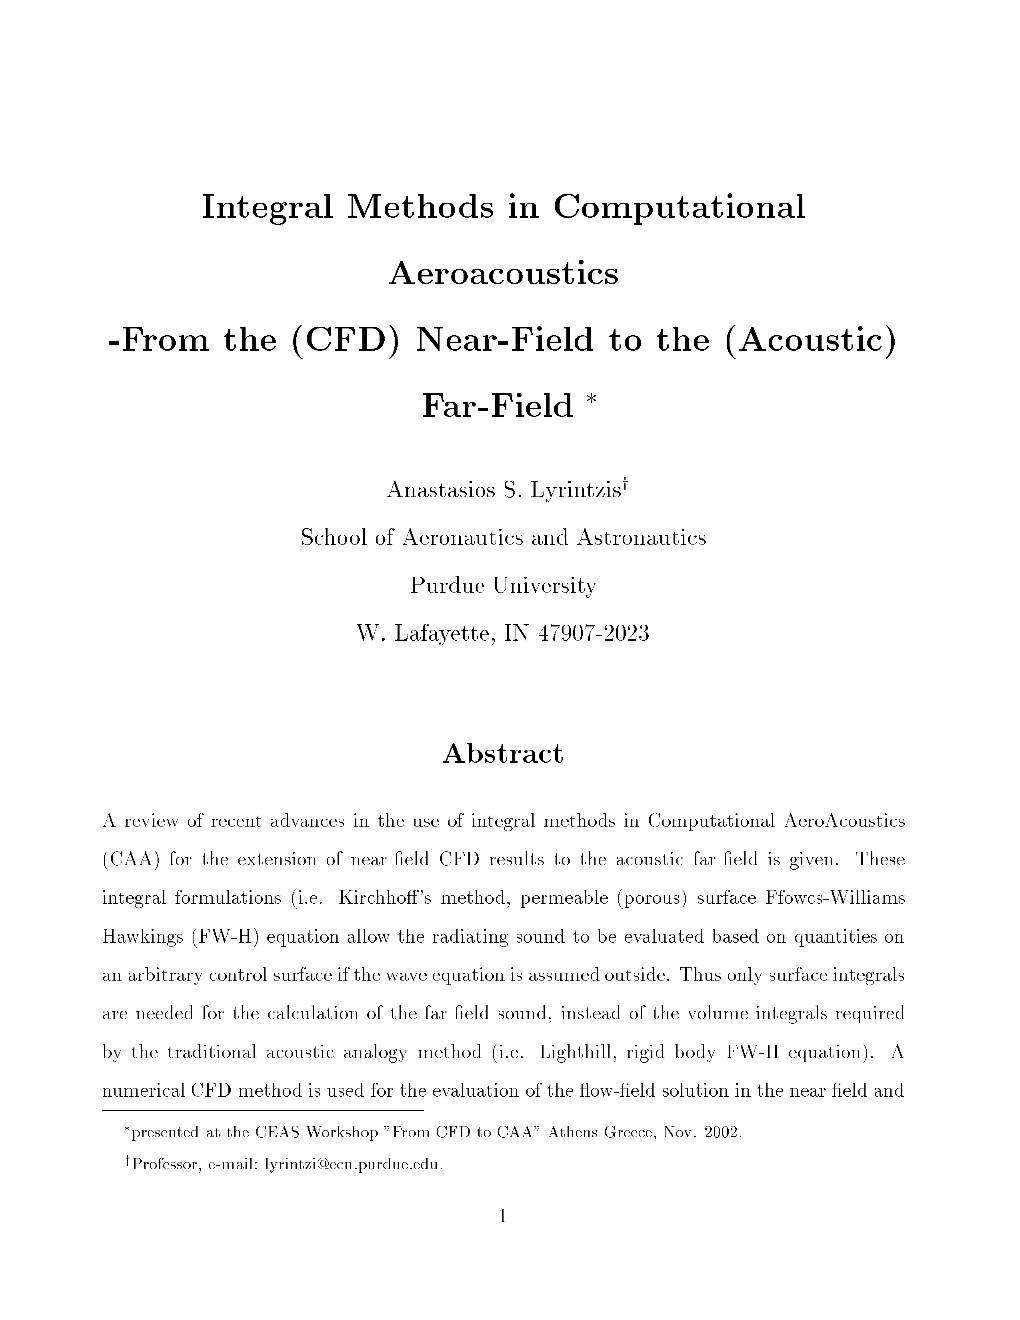 Integral Methods in Computational Aeroacoustics